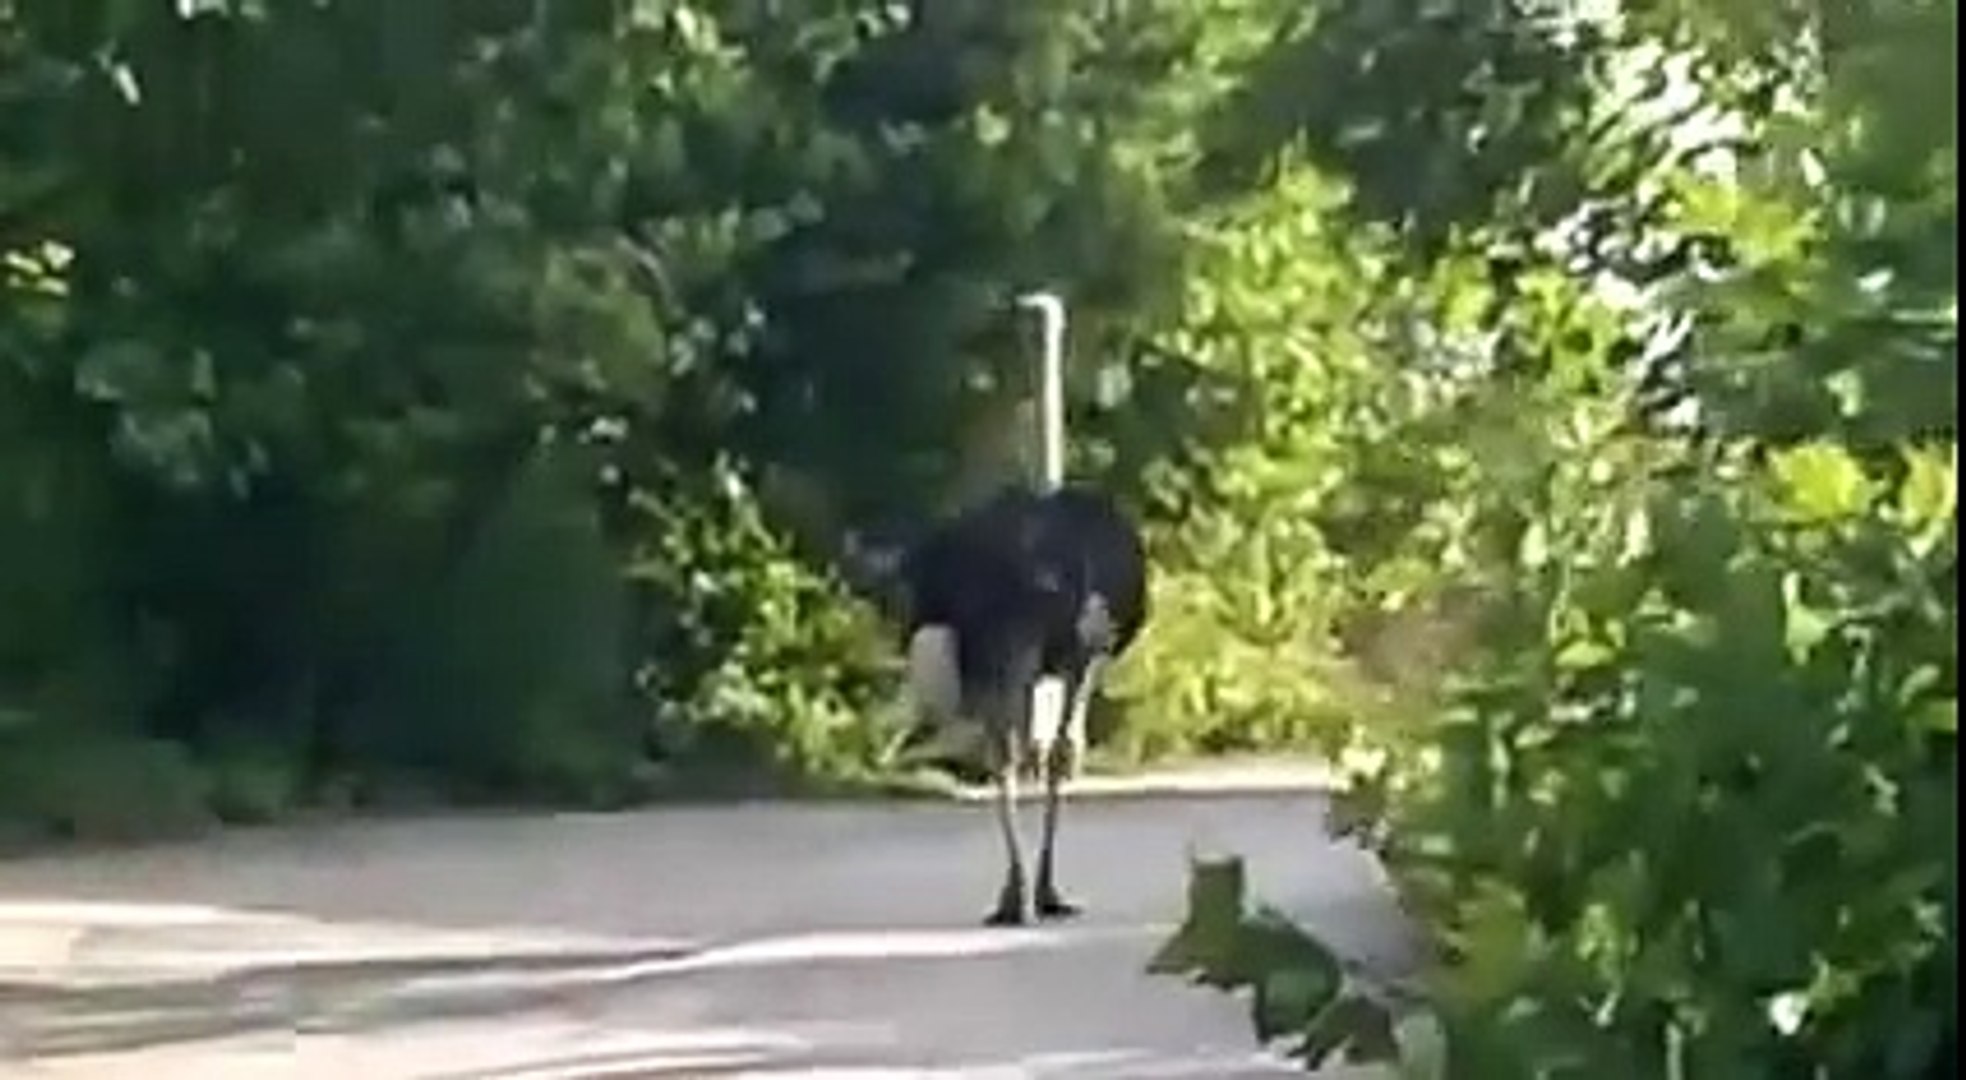 Ostrich running on the street